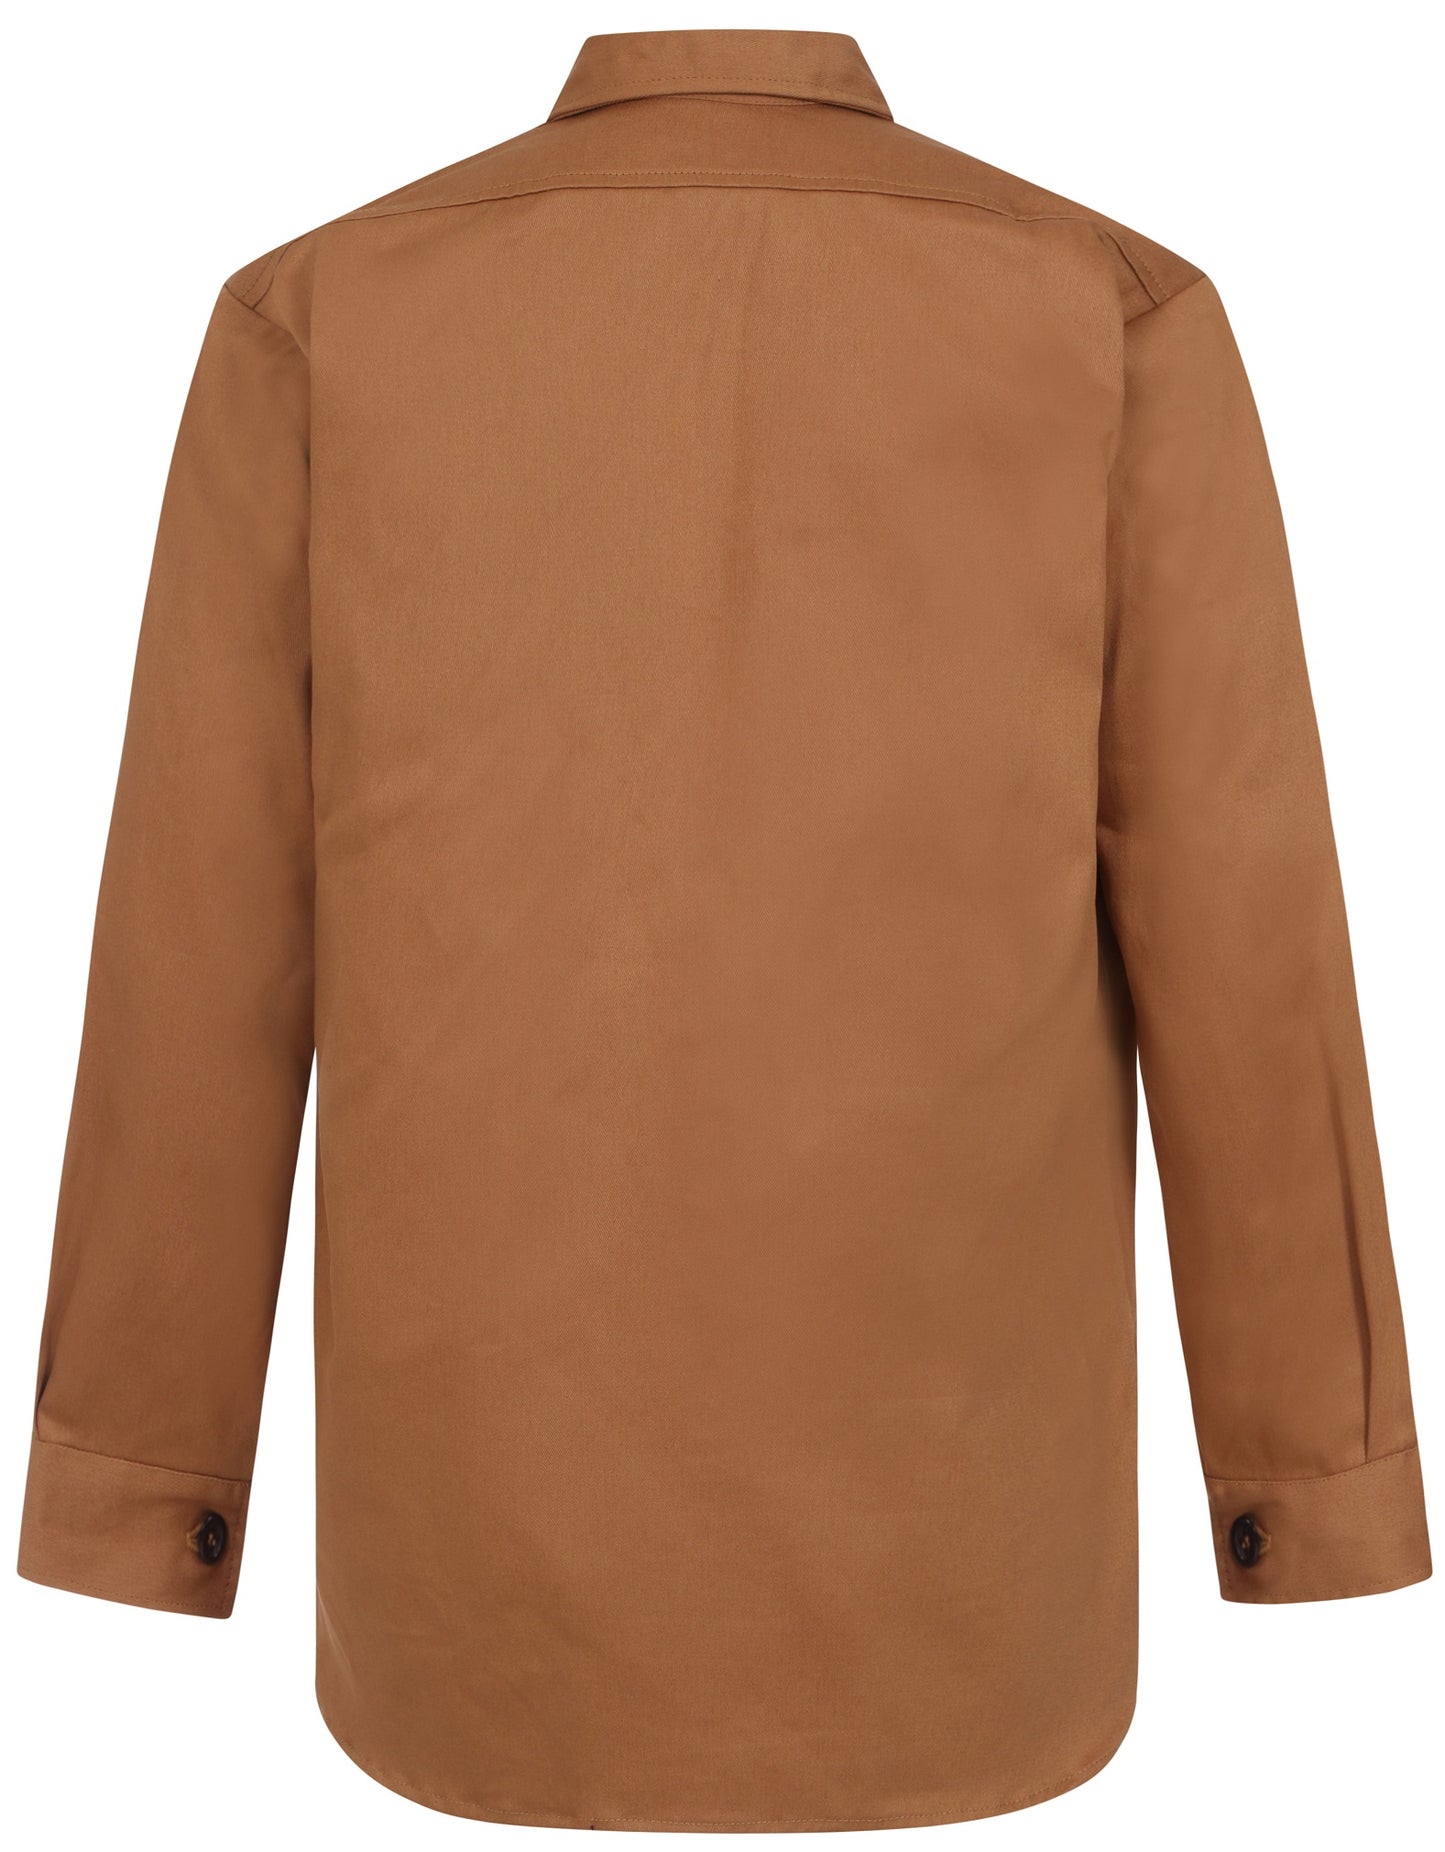 Yarmo Men's Long Sleeve Cotton Shirt, Khaki - SH011